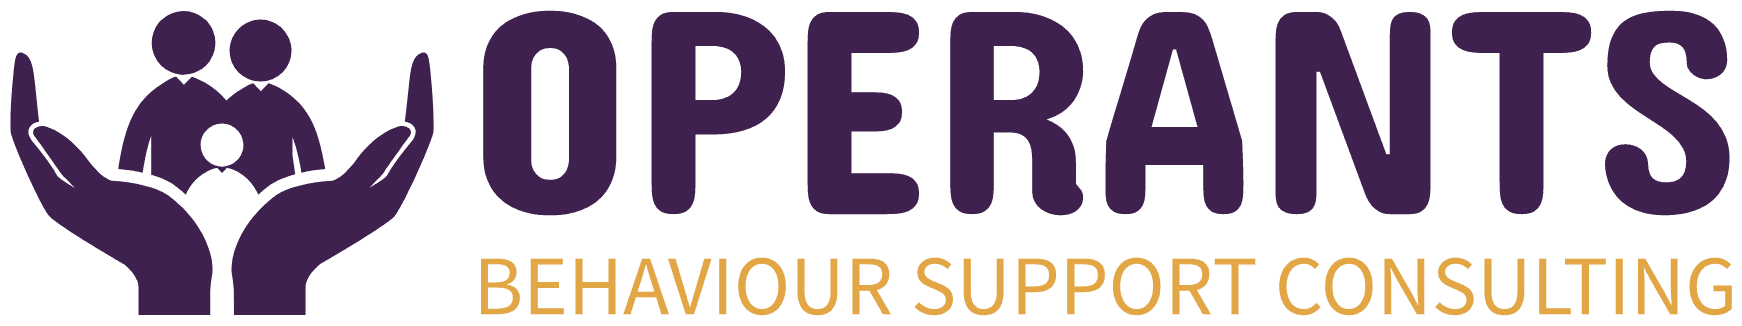 Operants Behaviour Support Logo